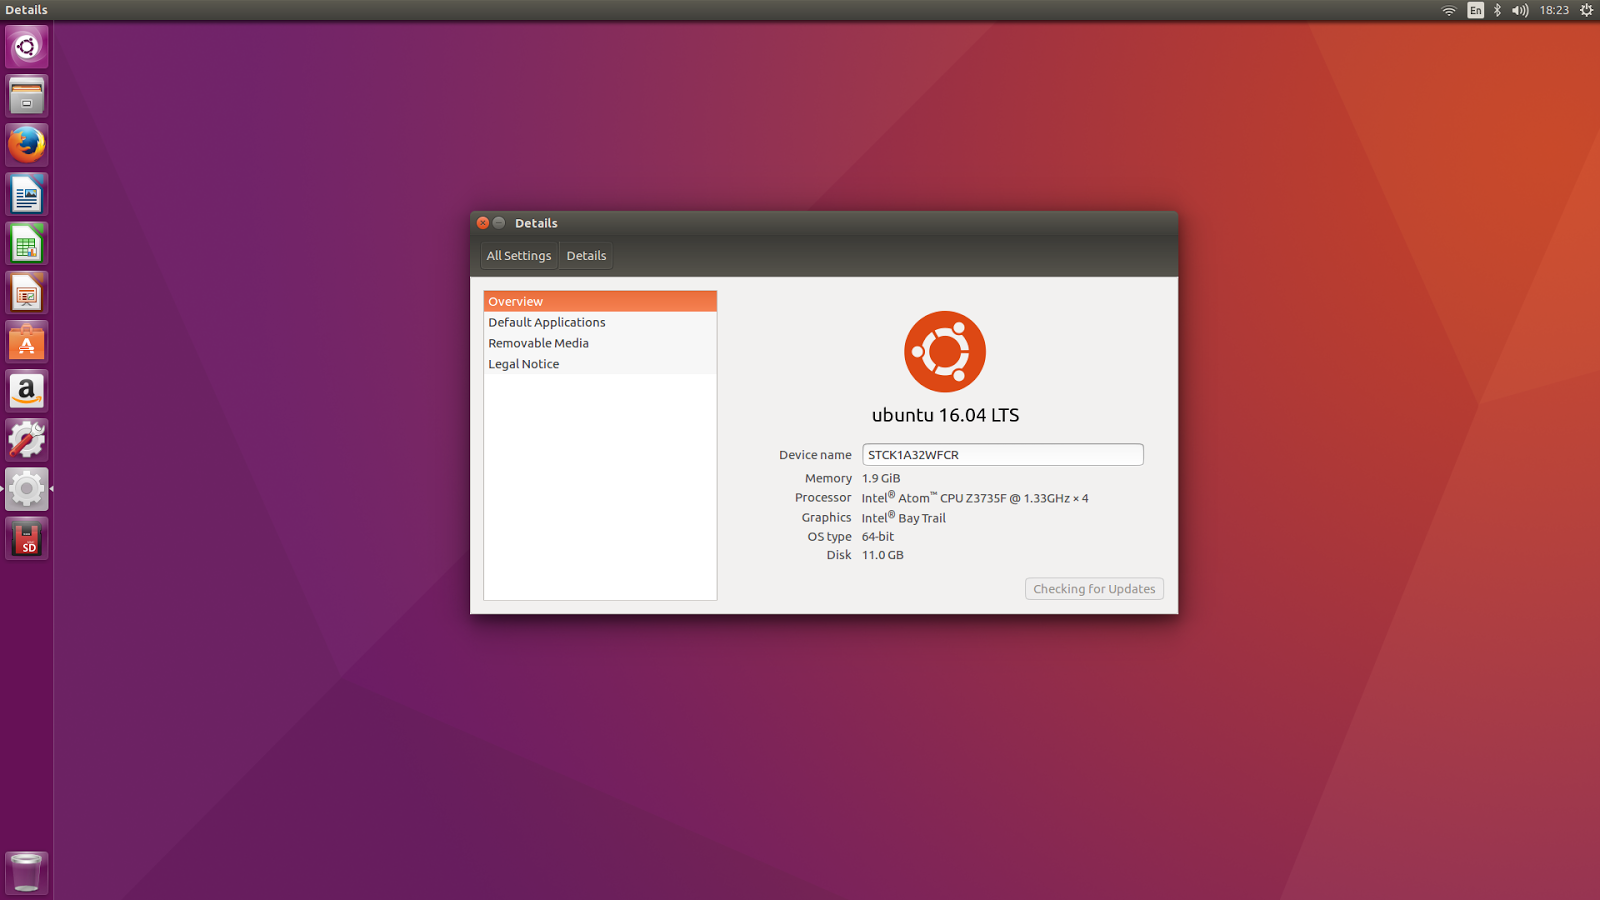 ubuntu 16.04 lts